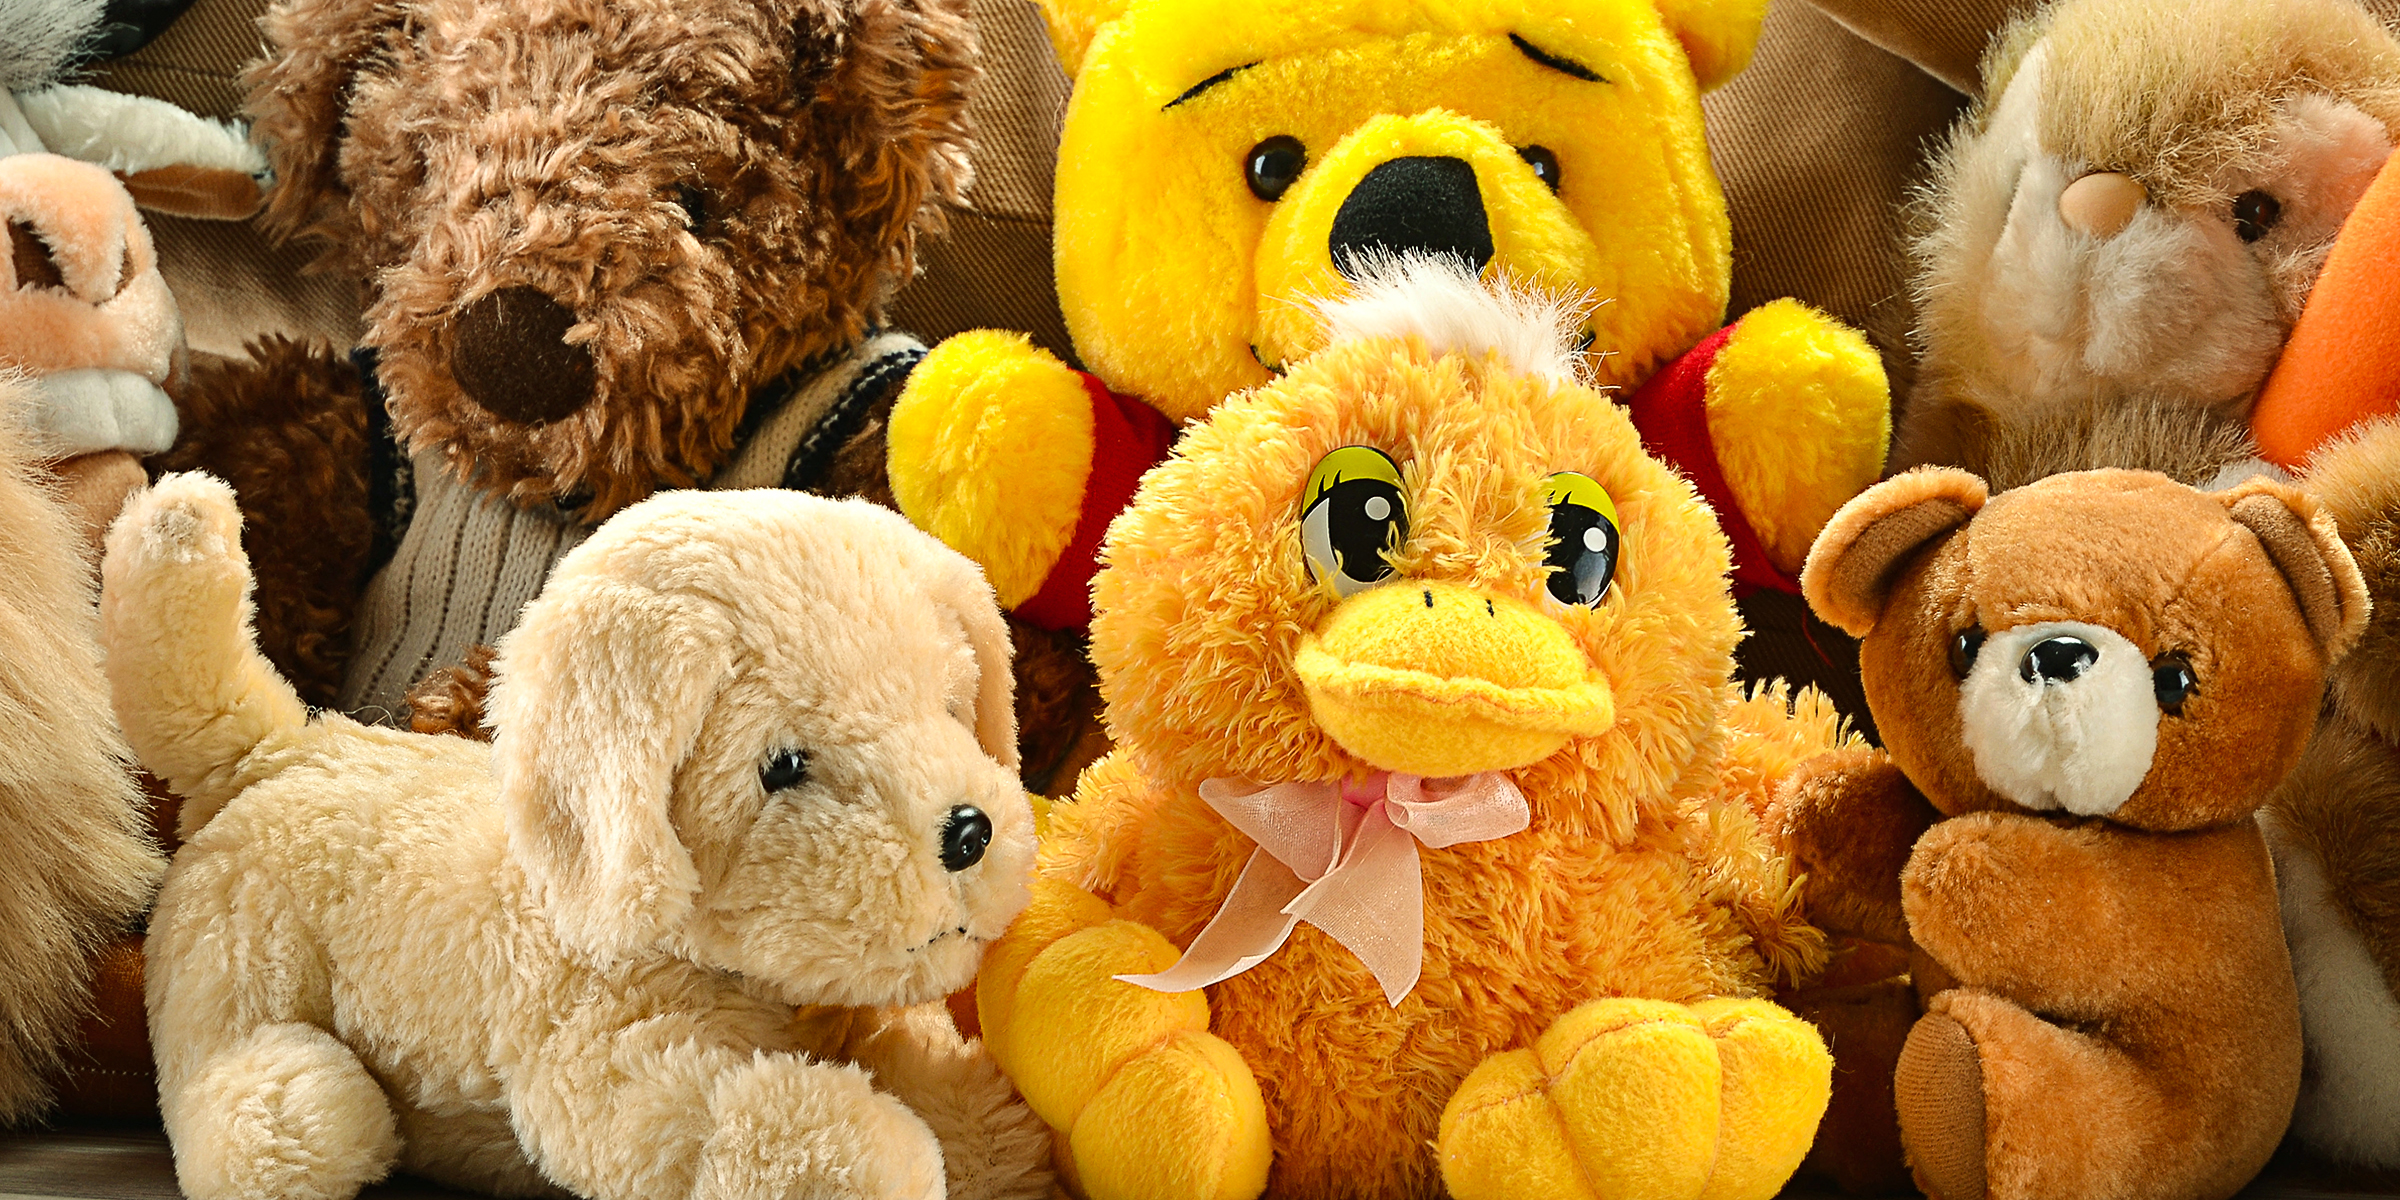 Assorted stuffed animals | Source: Shutterstock